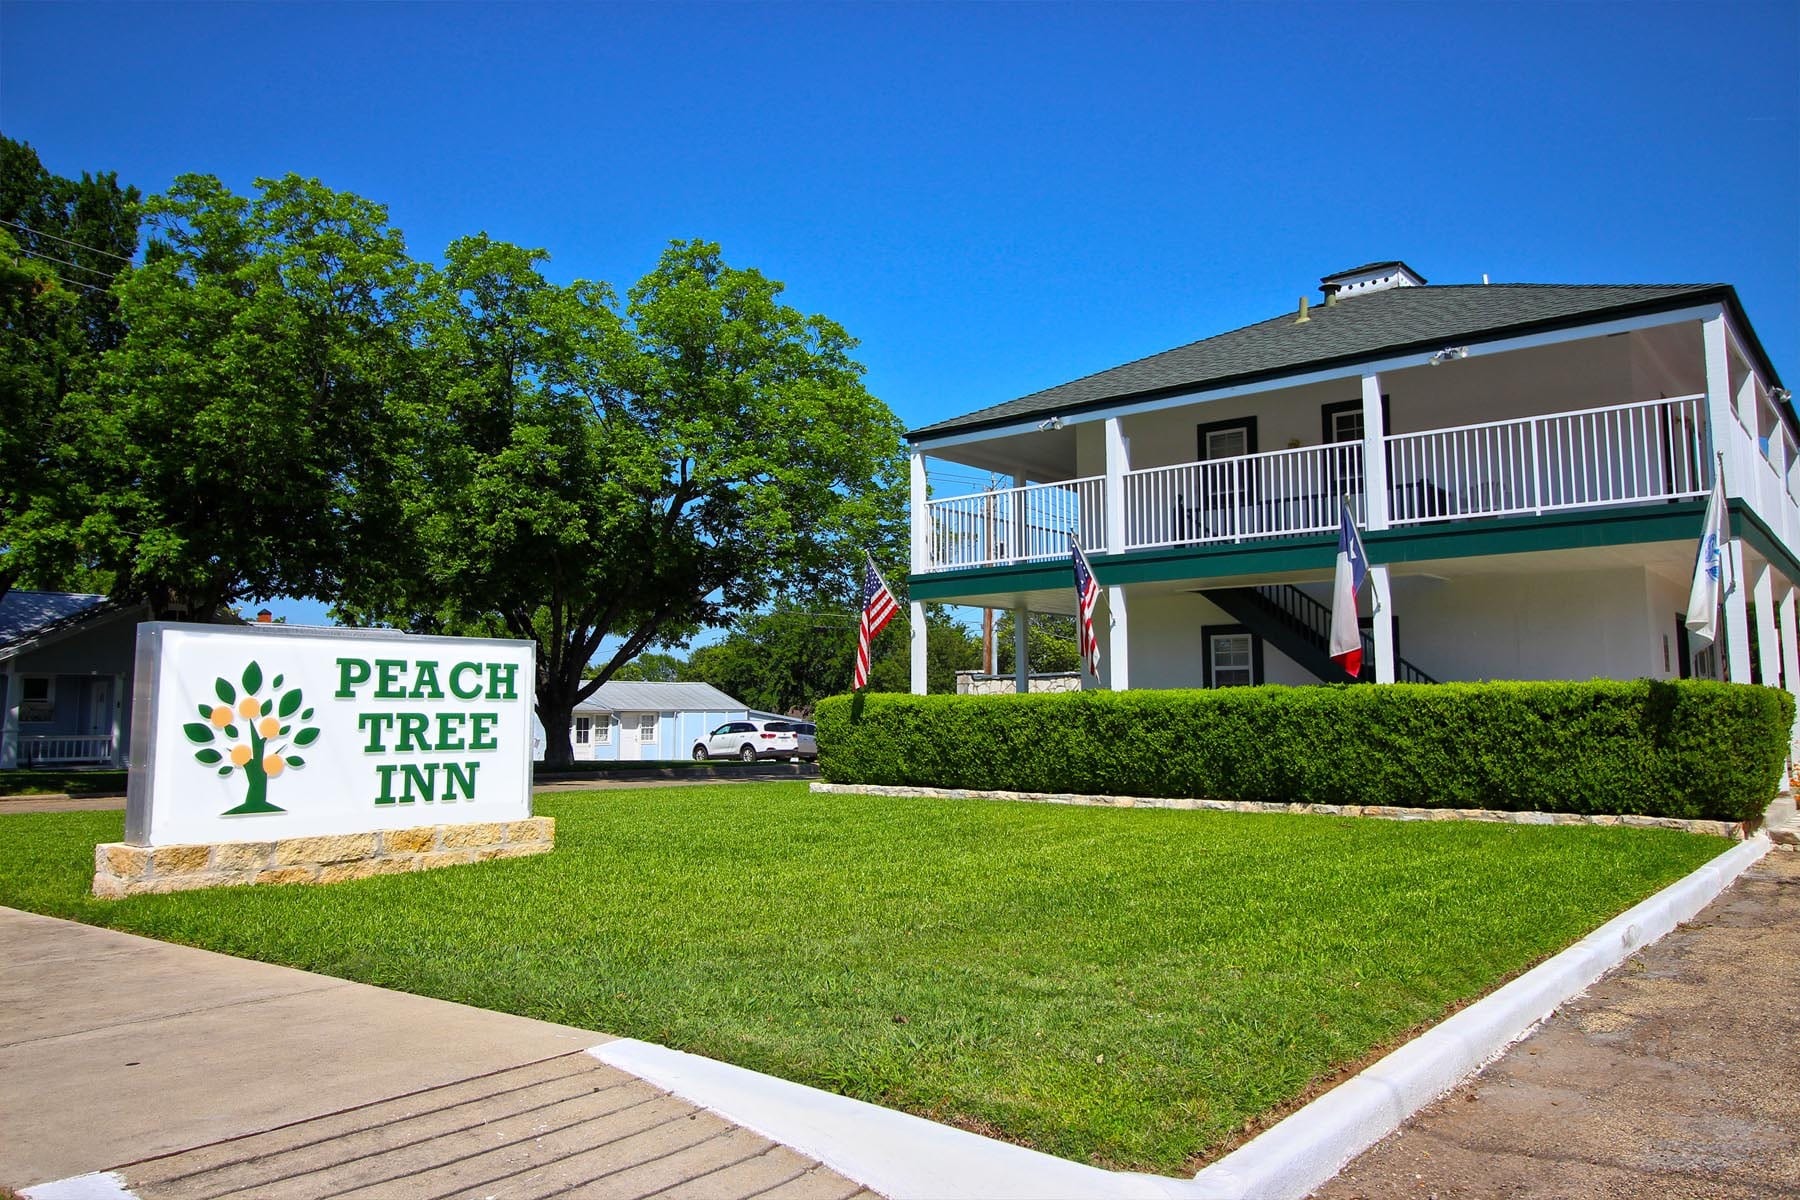 Peach Tree Inn sign and building.